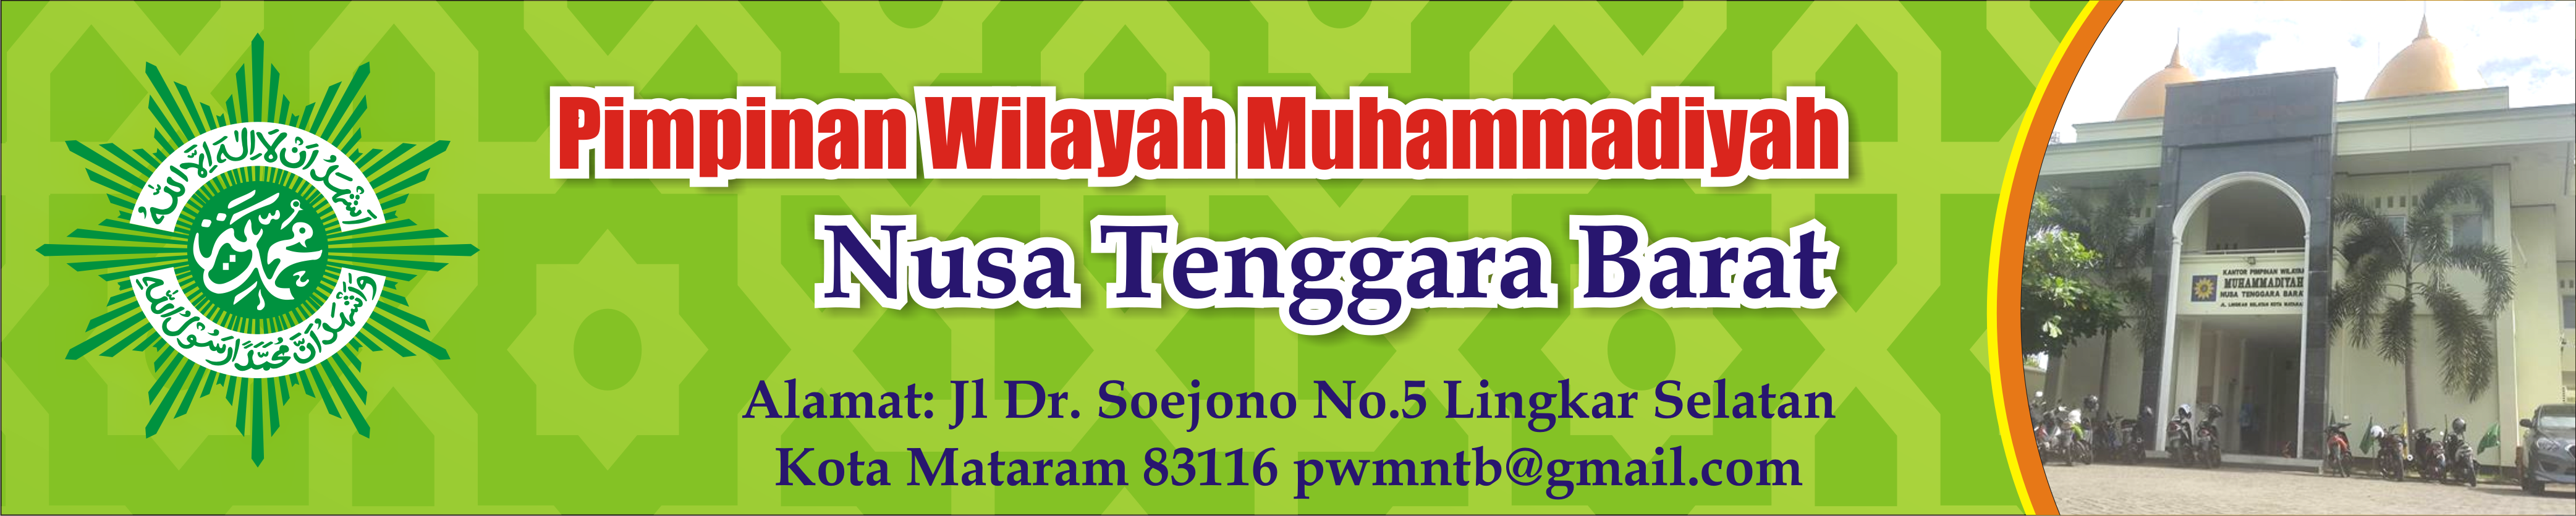  Pimpinan Wilayah Muhammadiyah Nusa Tenggara Barat